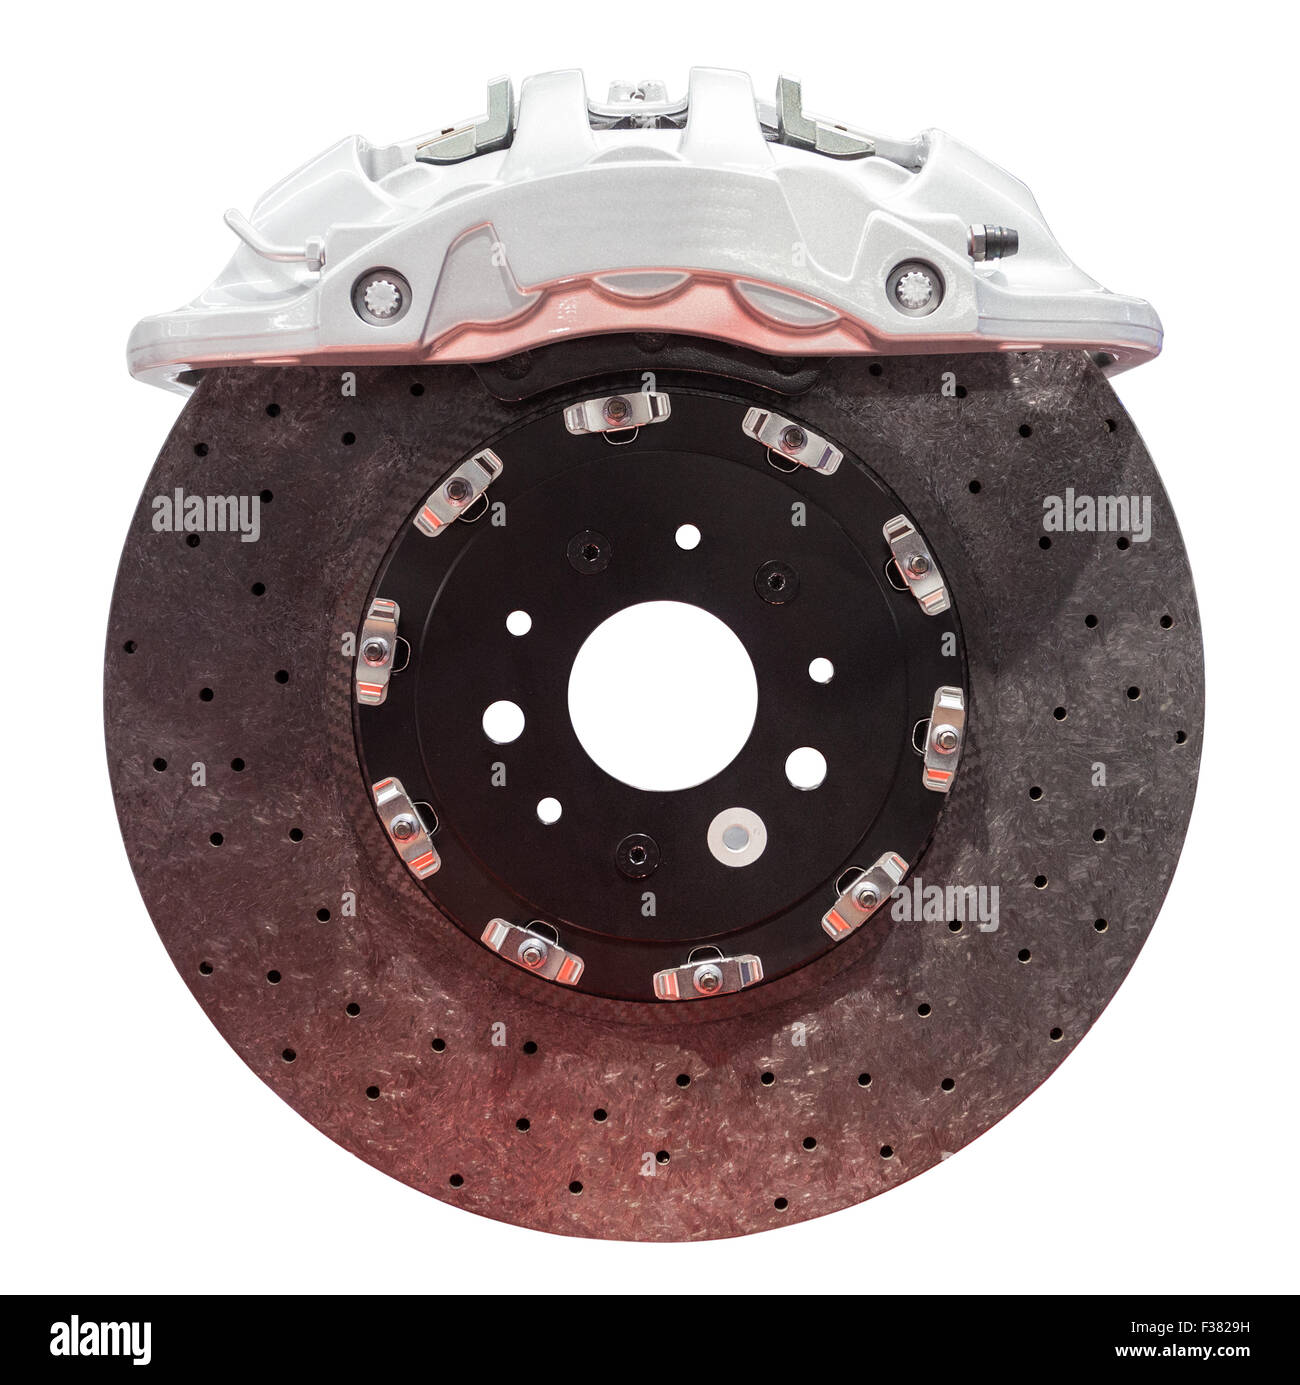 Carbon ceramic brake for high perfomance automobiles Stock Photo